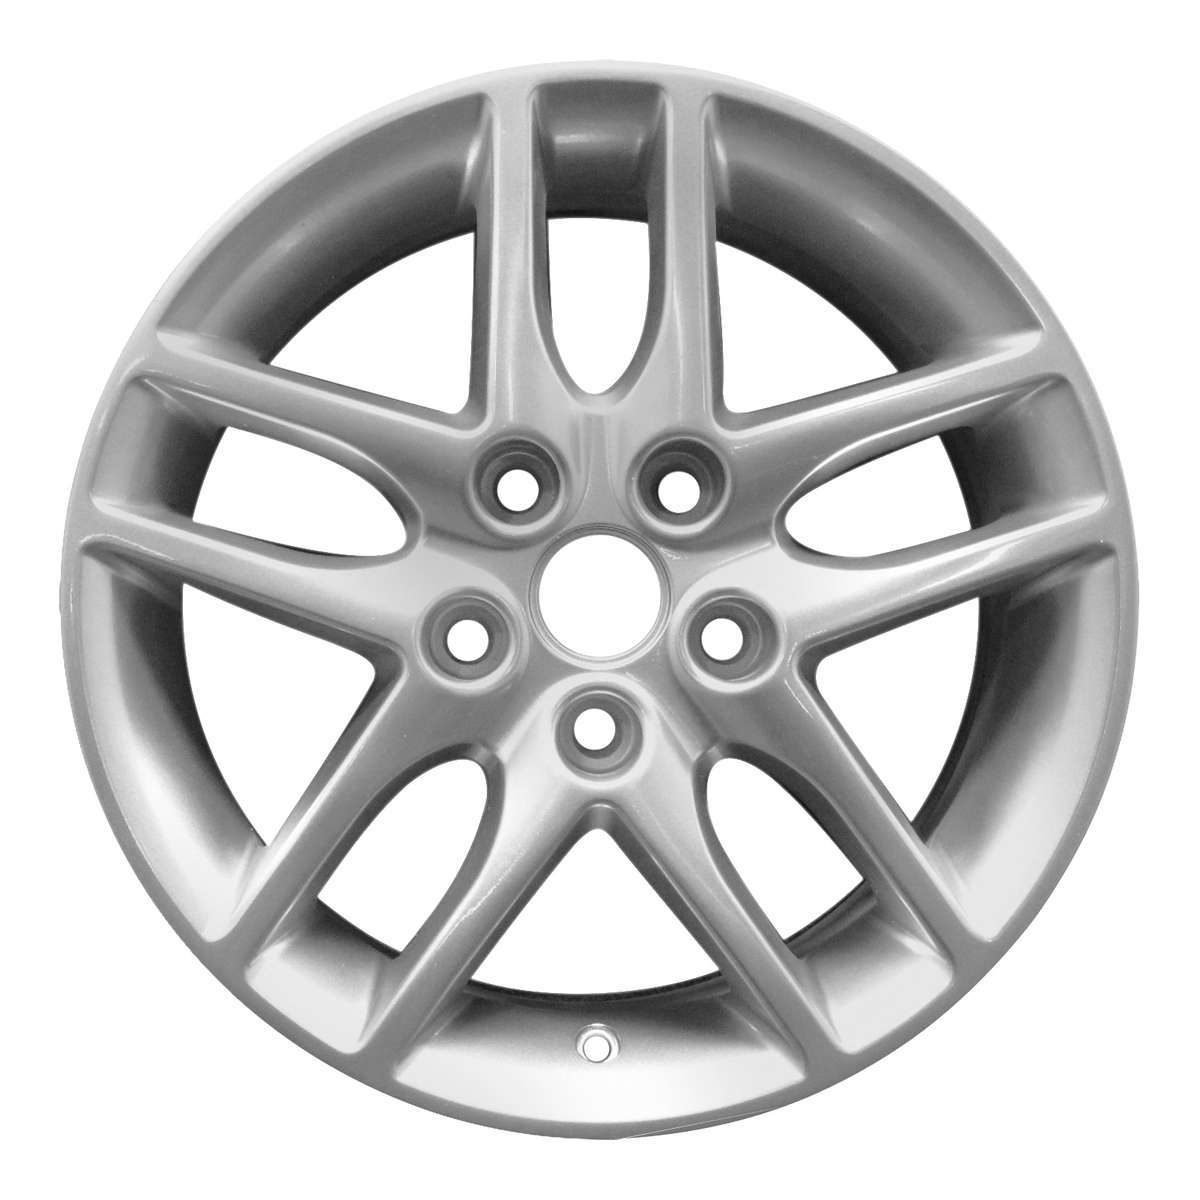 2012 Ford Fusion 16" OEM Wheel Rim W3798S